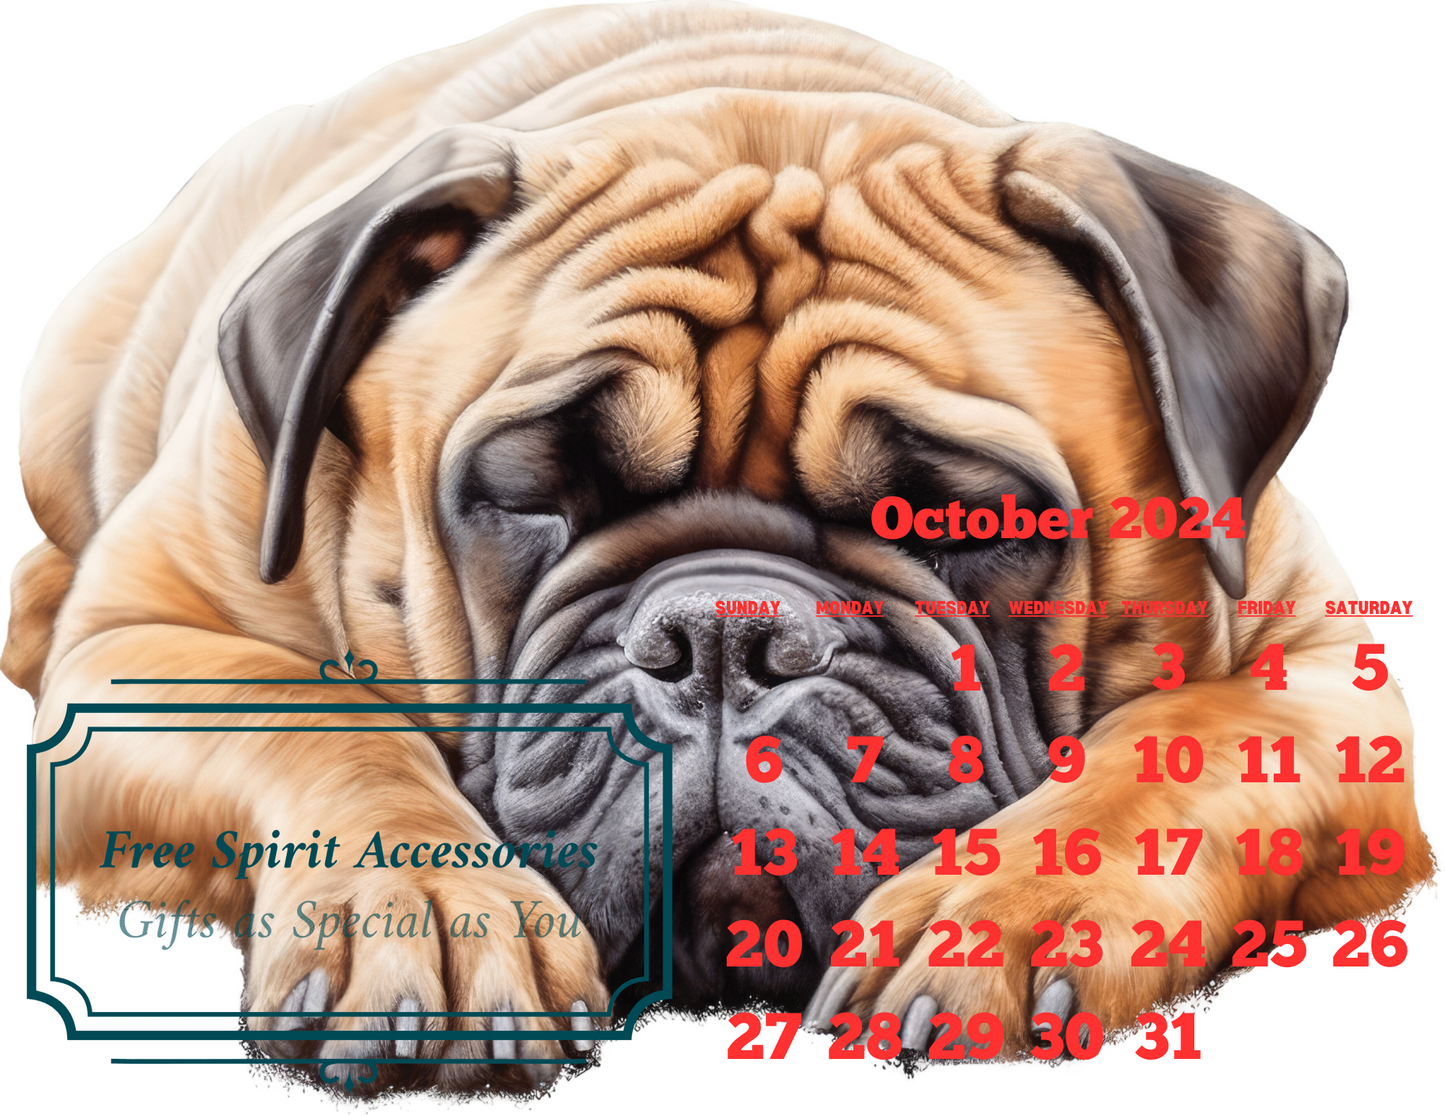  Digital Sleeping Dogs 2024 Calendar by Free Spirit Accessories sold by Free Spirit Accessories